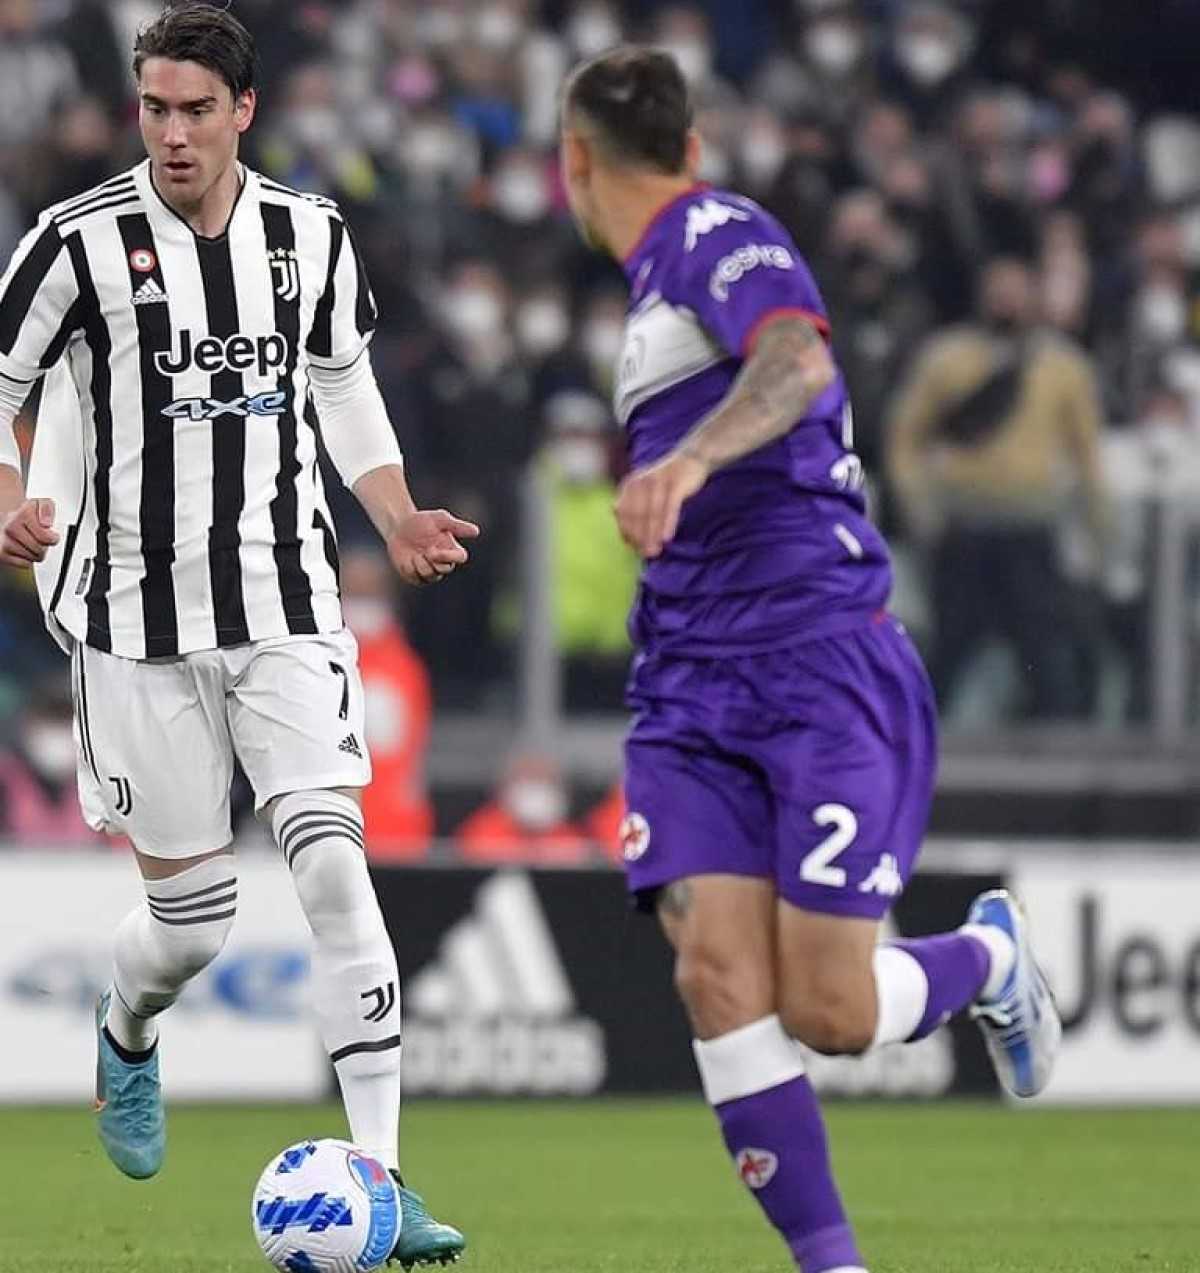 Juventus-Fiorentina (2-0): analisi tattica e considerazioni